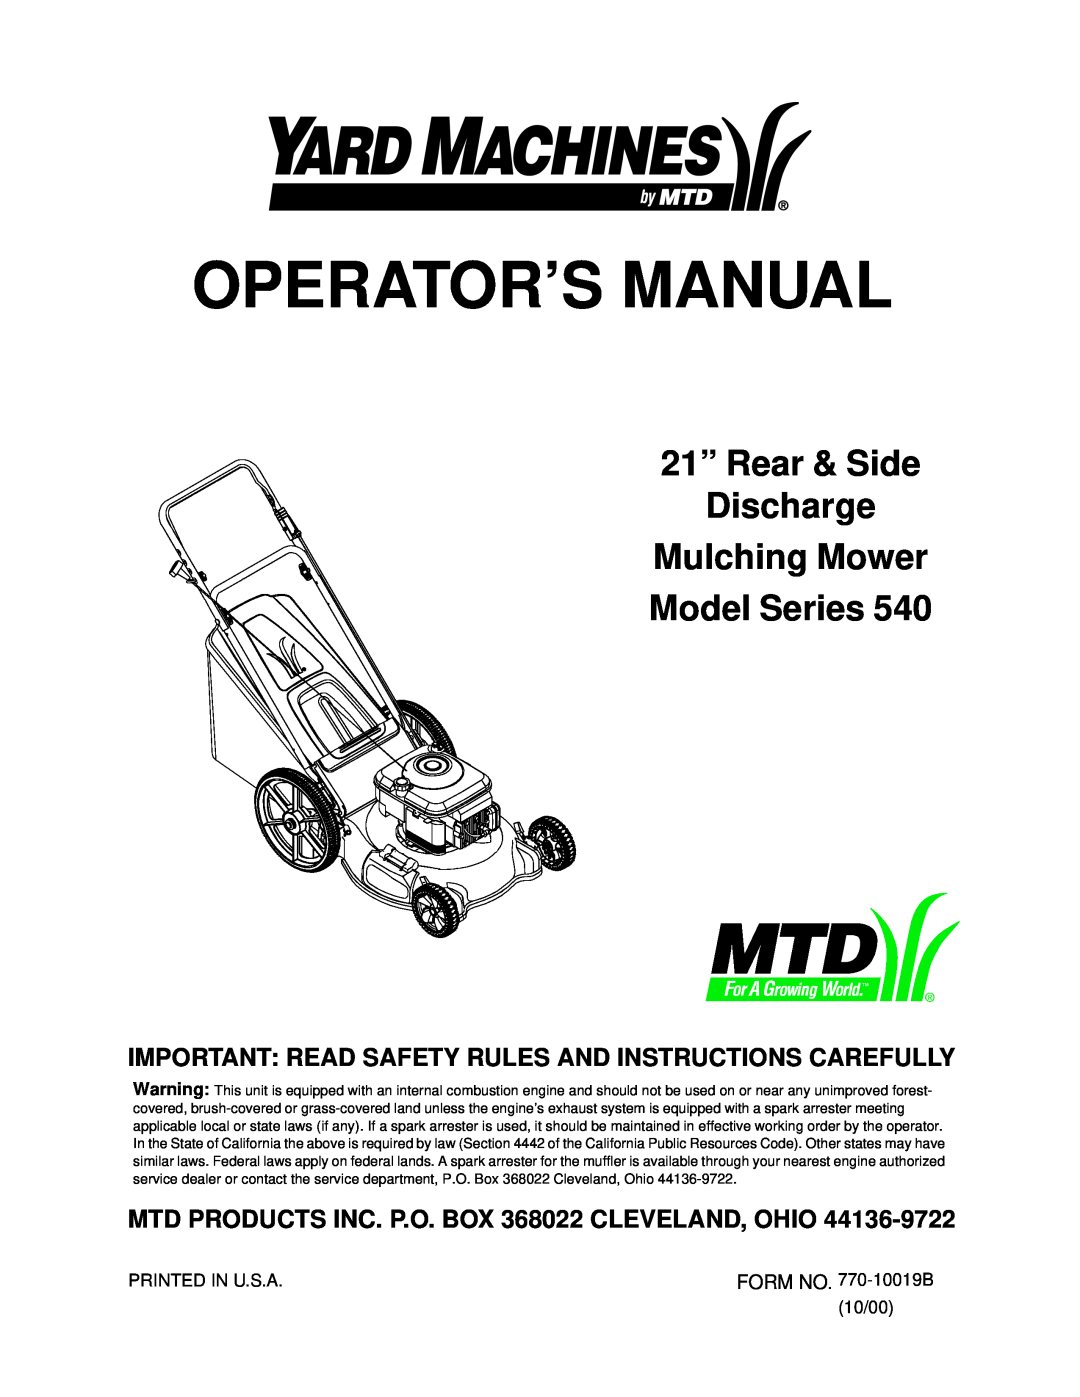 Bolens Series 540 manual Operator’S Manual, 21” Rear & Side Discharge Mulching Mower Model Series 